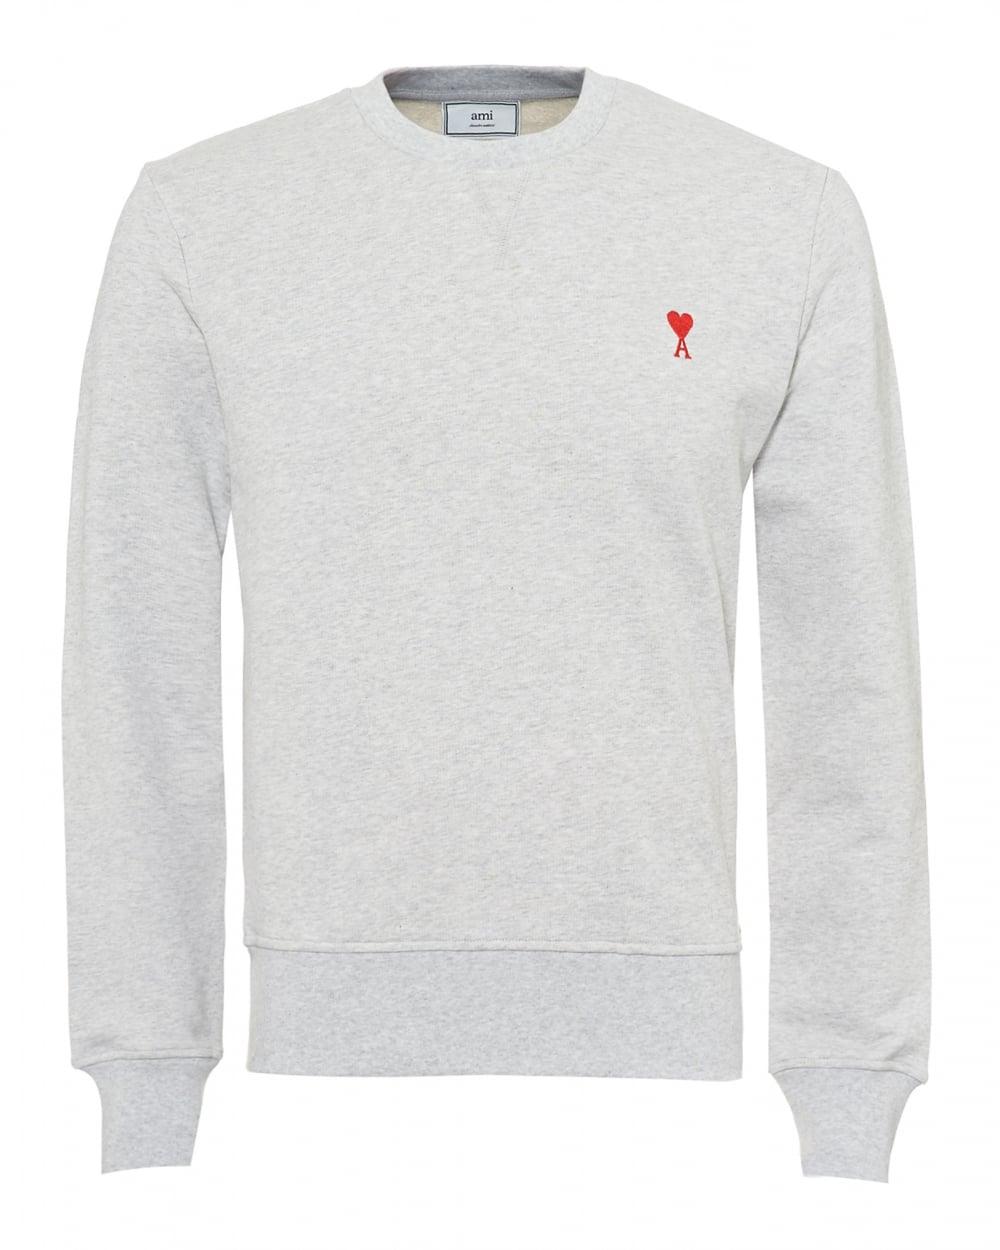 Light Grey Logo - Mens Basic Sweatshirt, Embroidered Heart Logo Light Grey Jumper